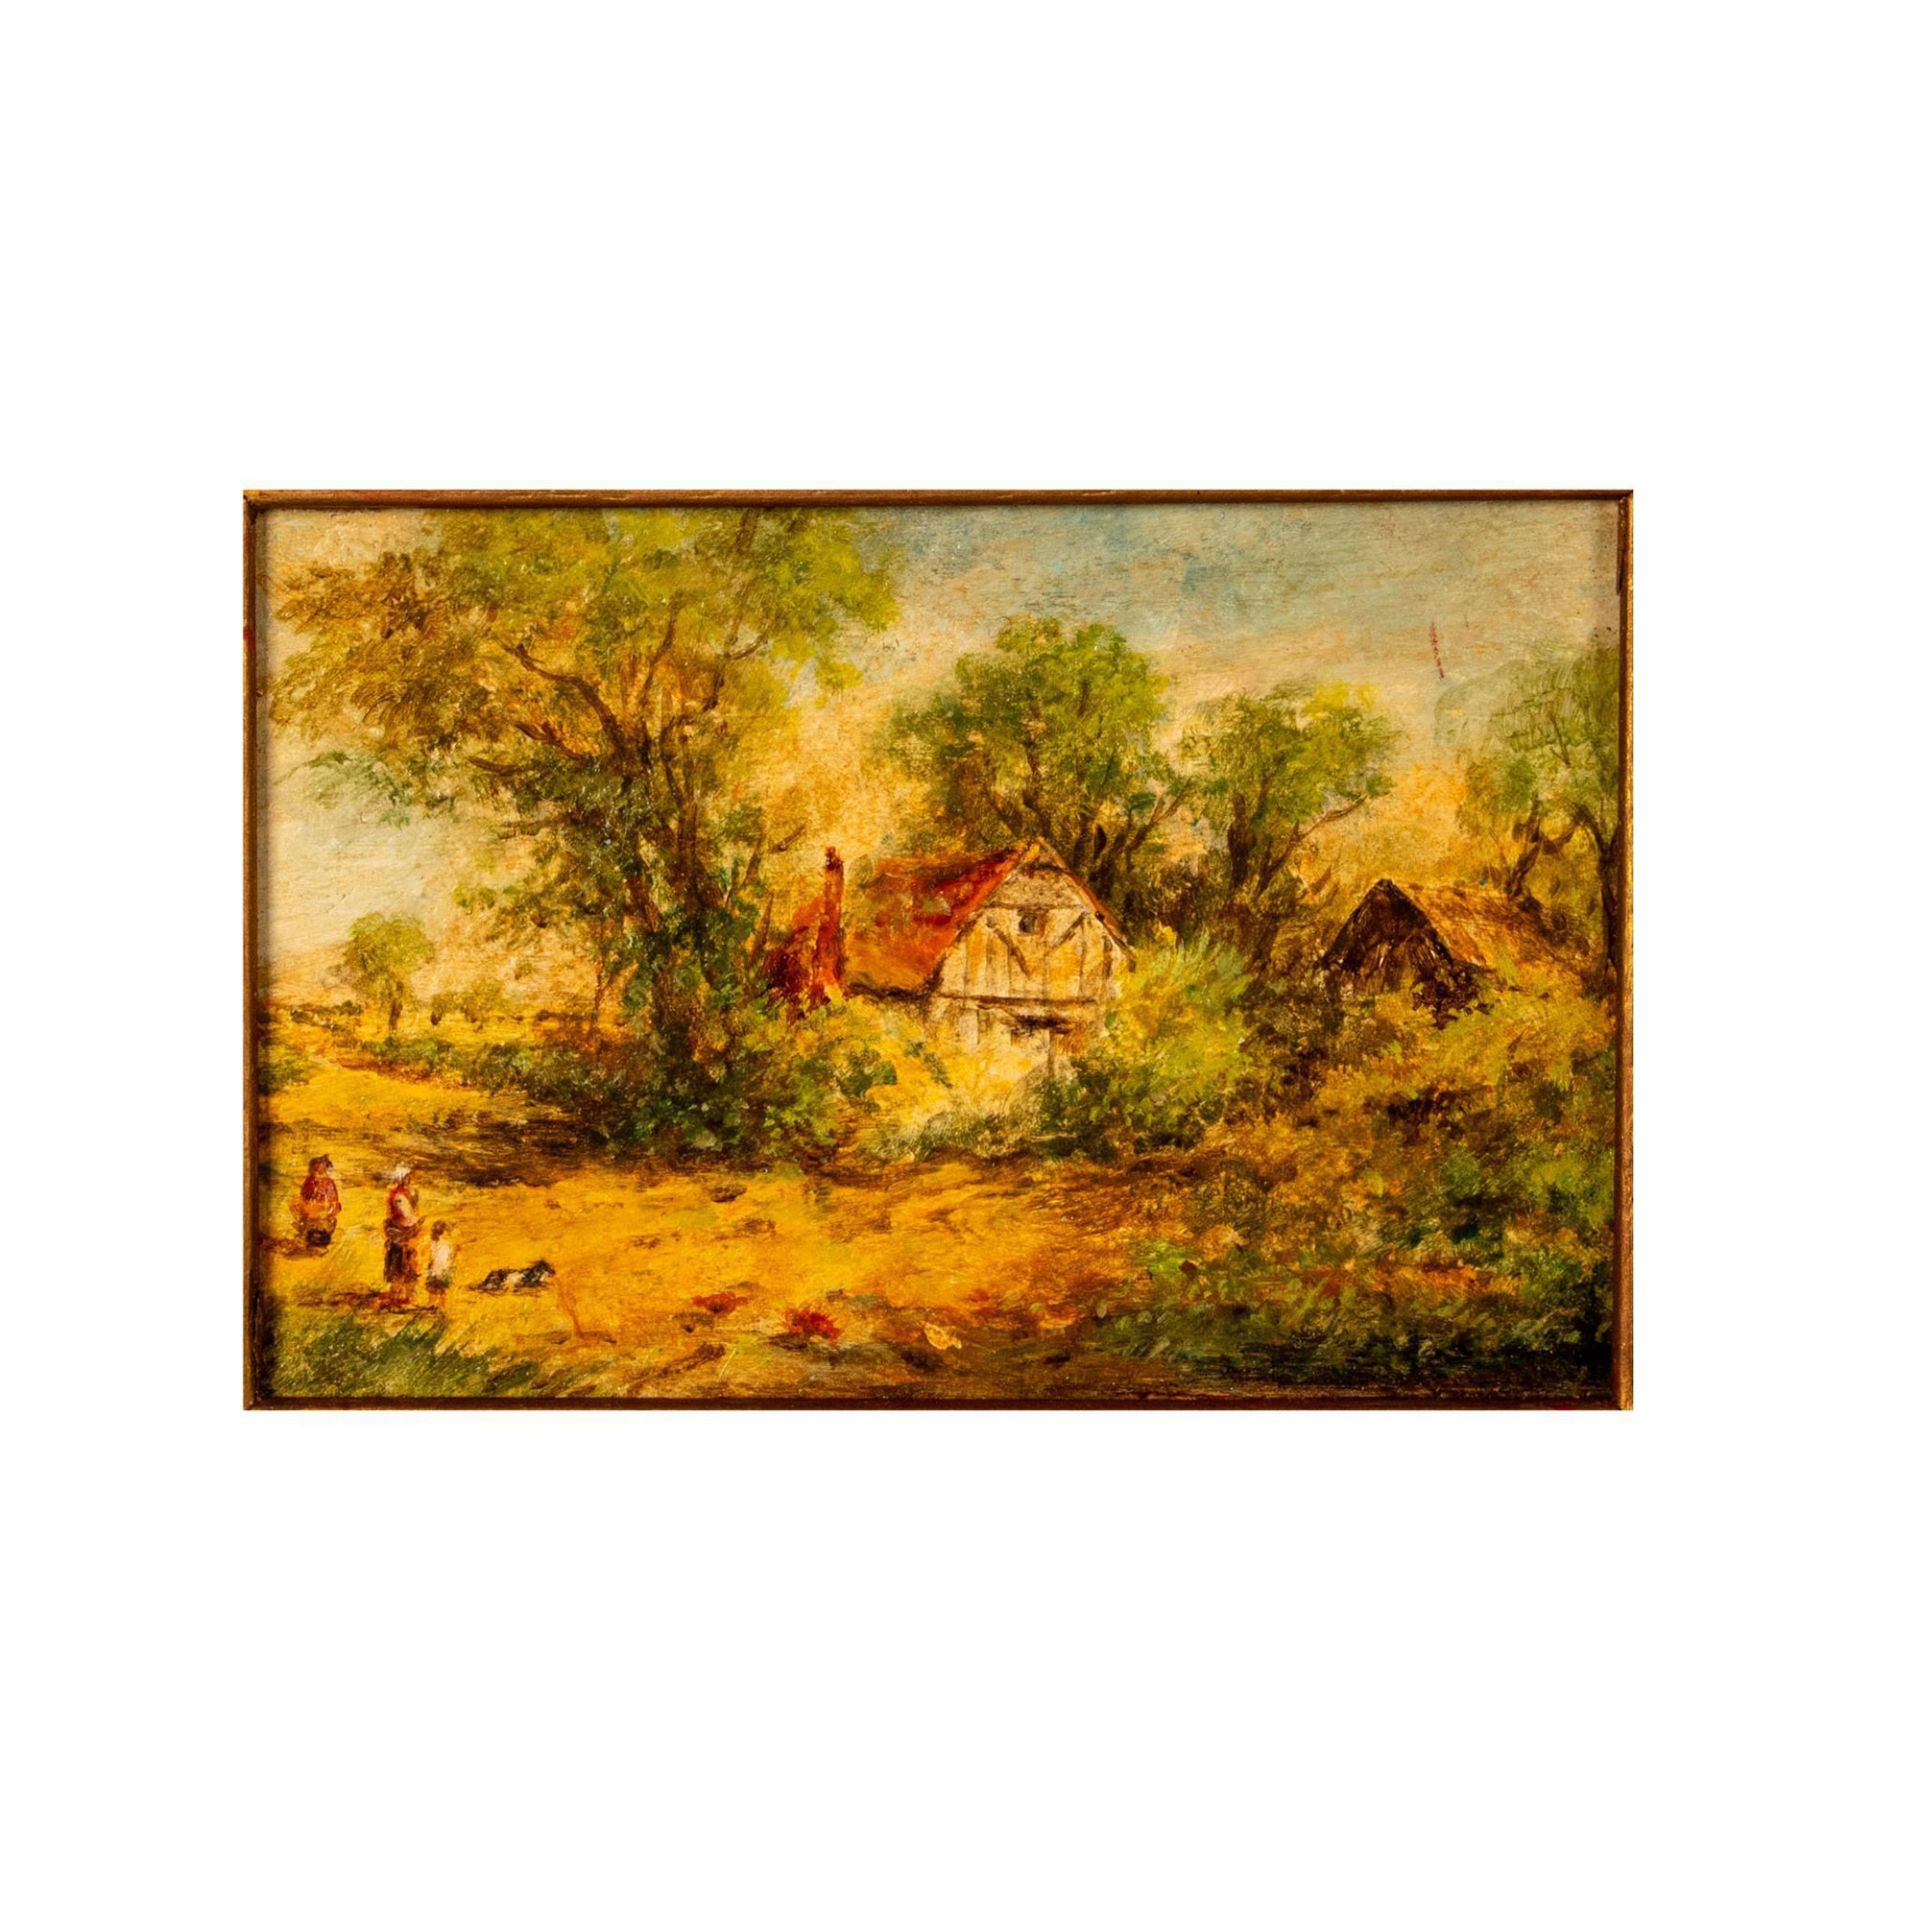 Original Oil on Canvas Miniature Painting, Rural Landscape - Image 2 of 6